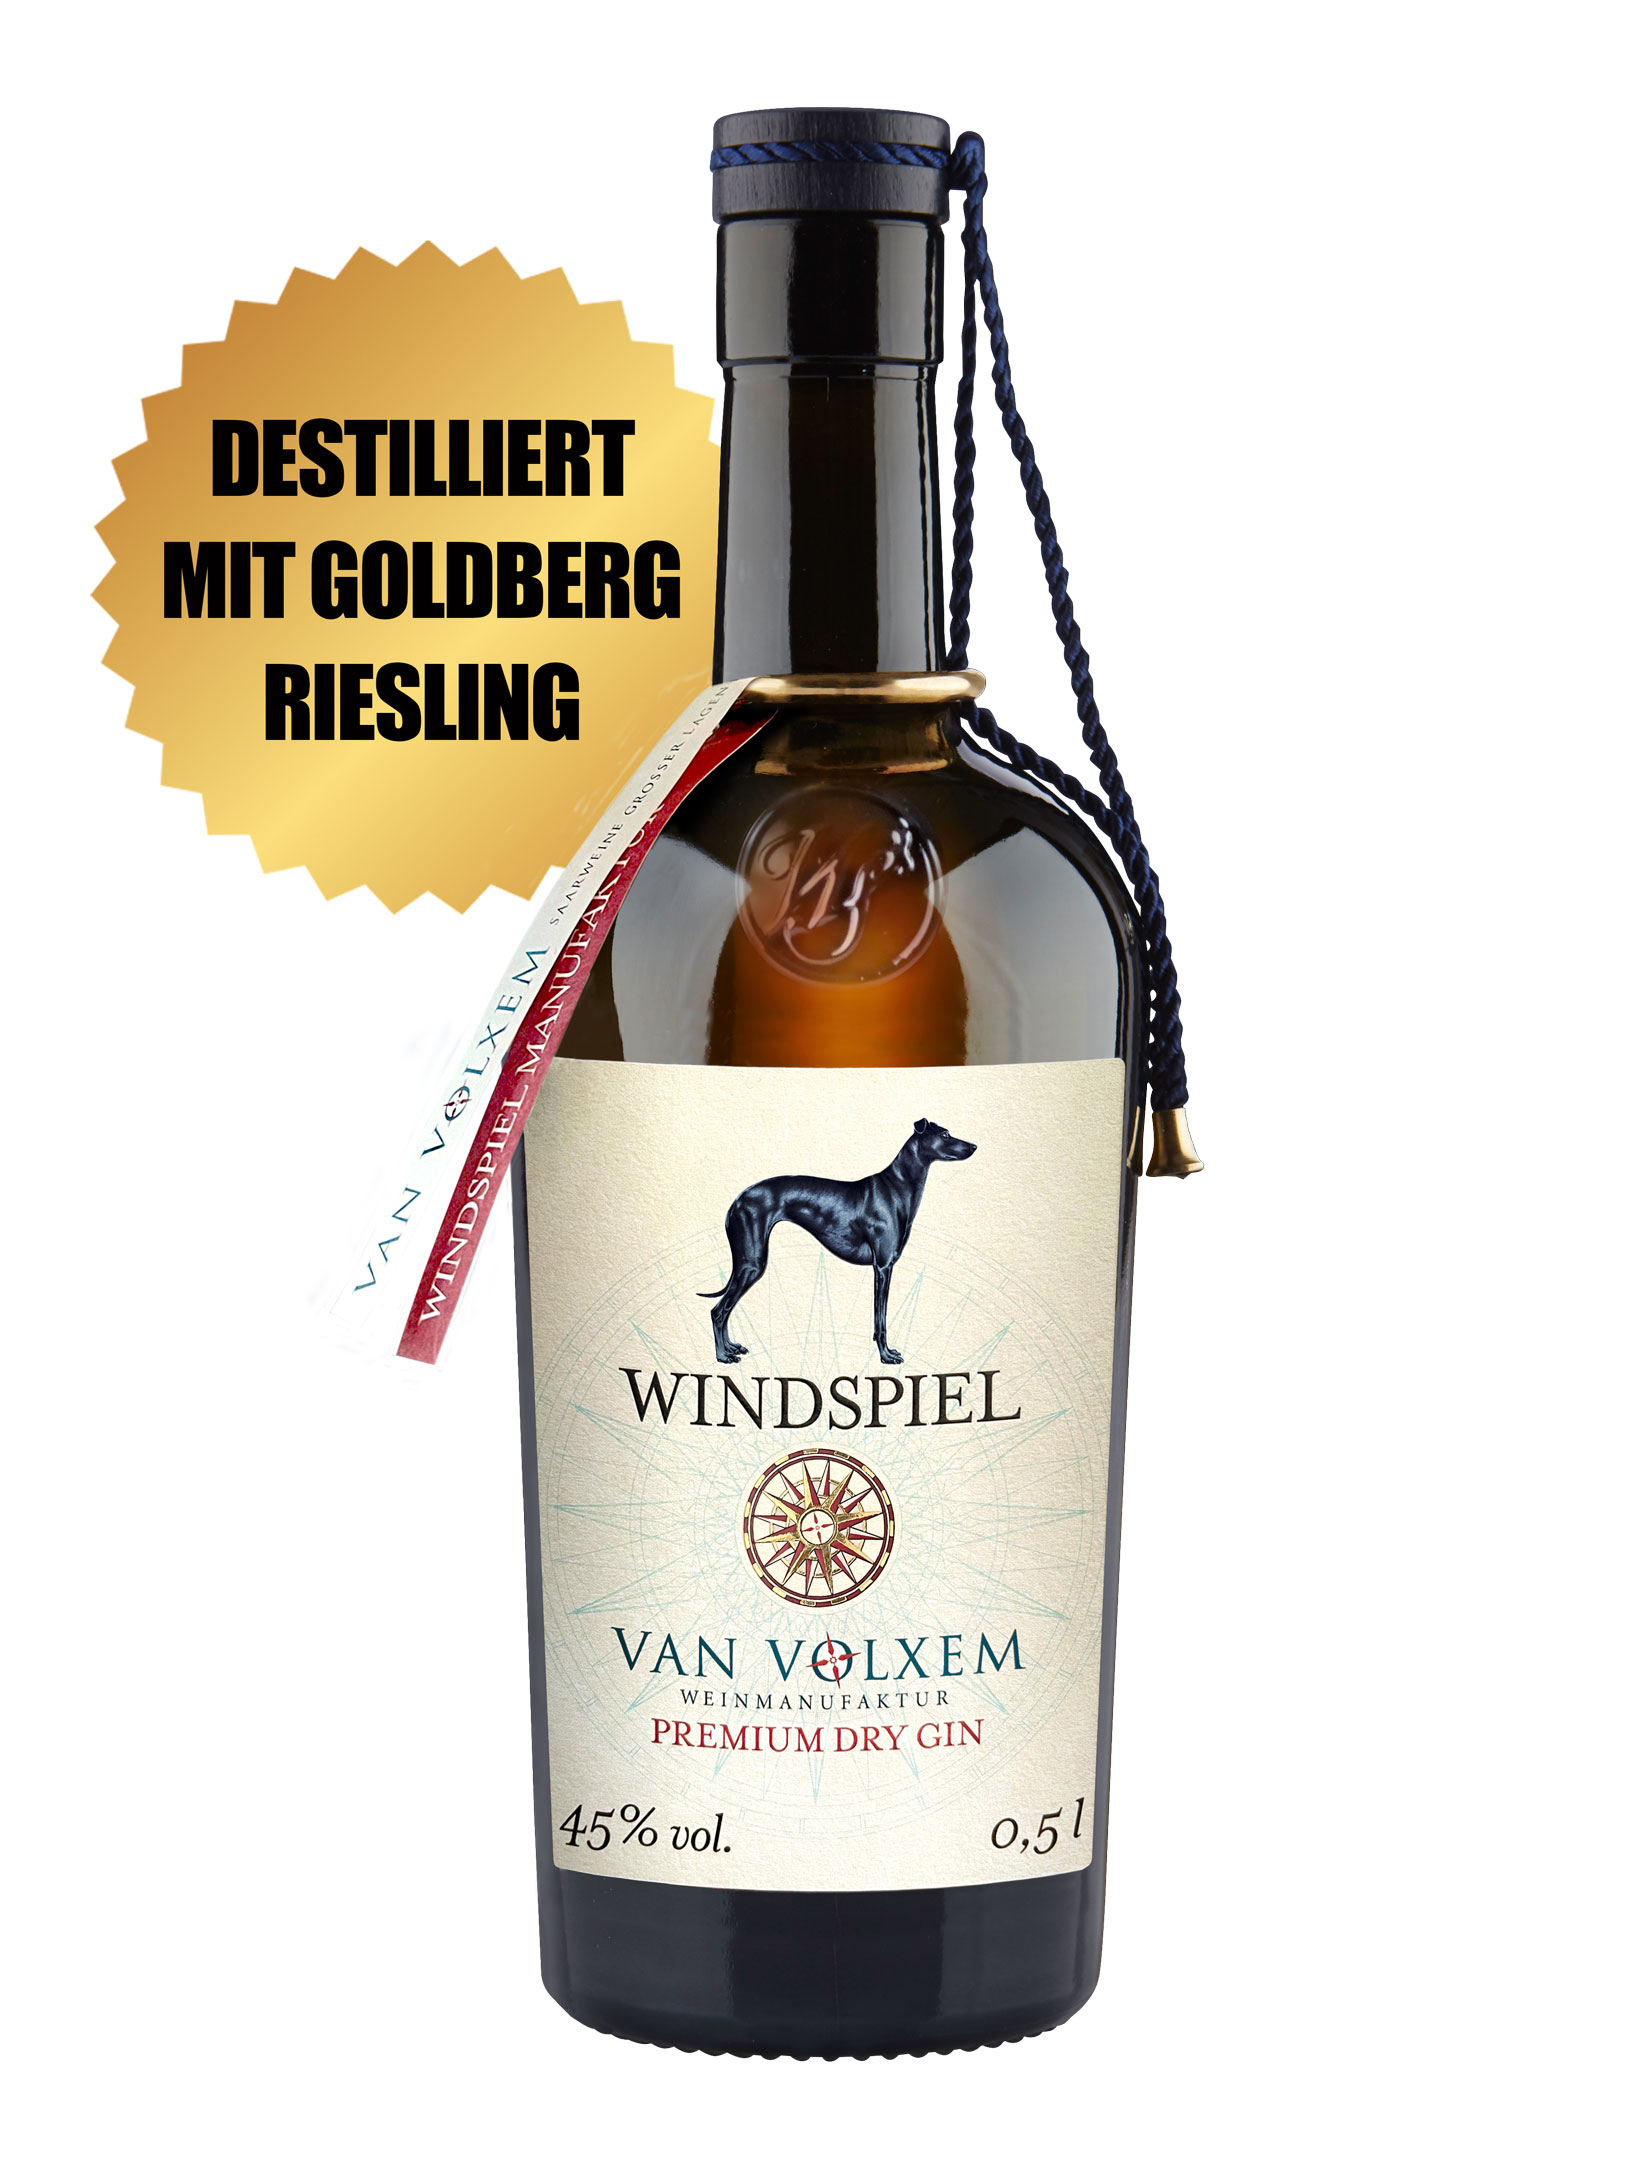 Windspiel Premium Dry Gin Van Volxem 45% vol. 0,5l